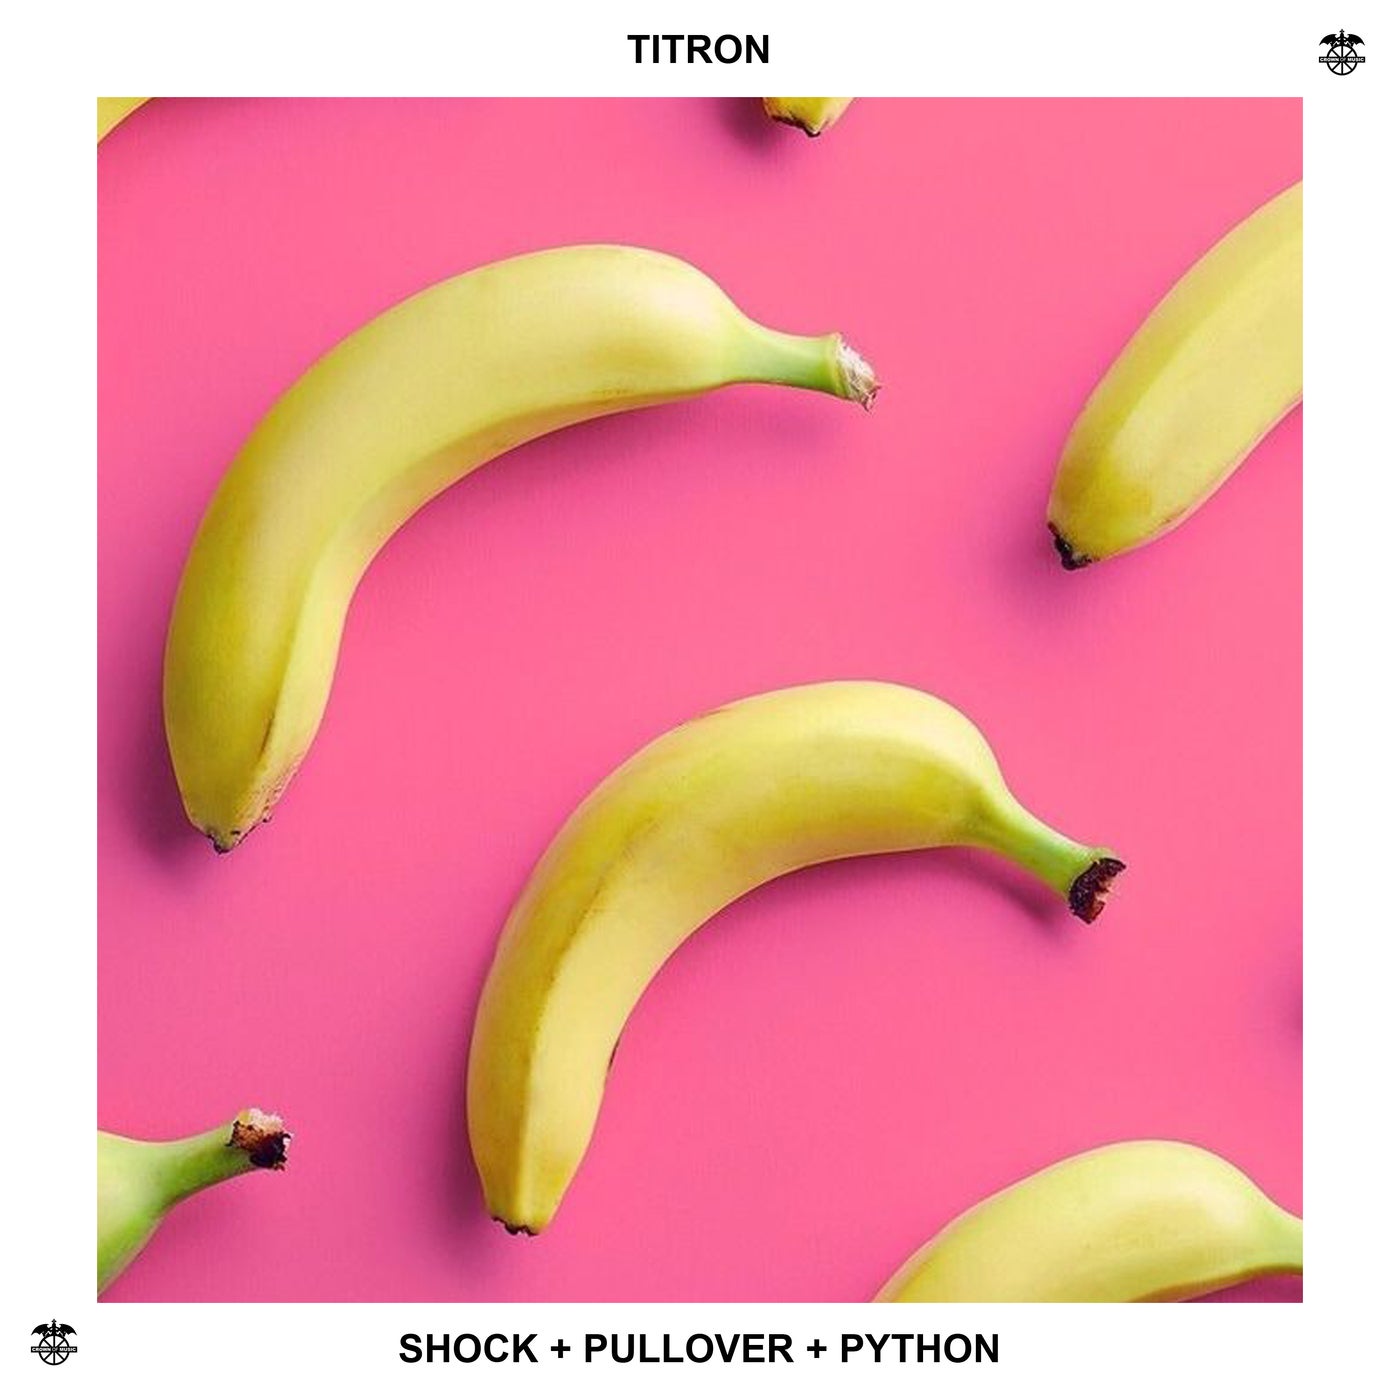 Shock + Pullover + Python